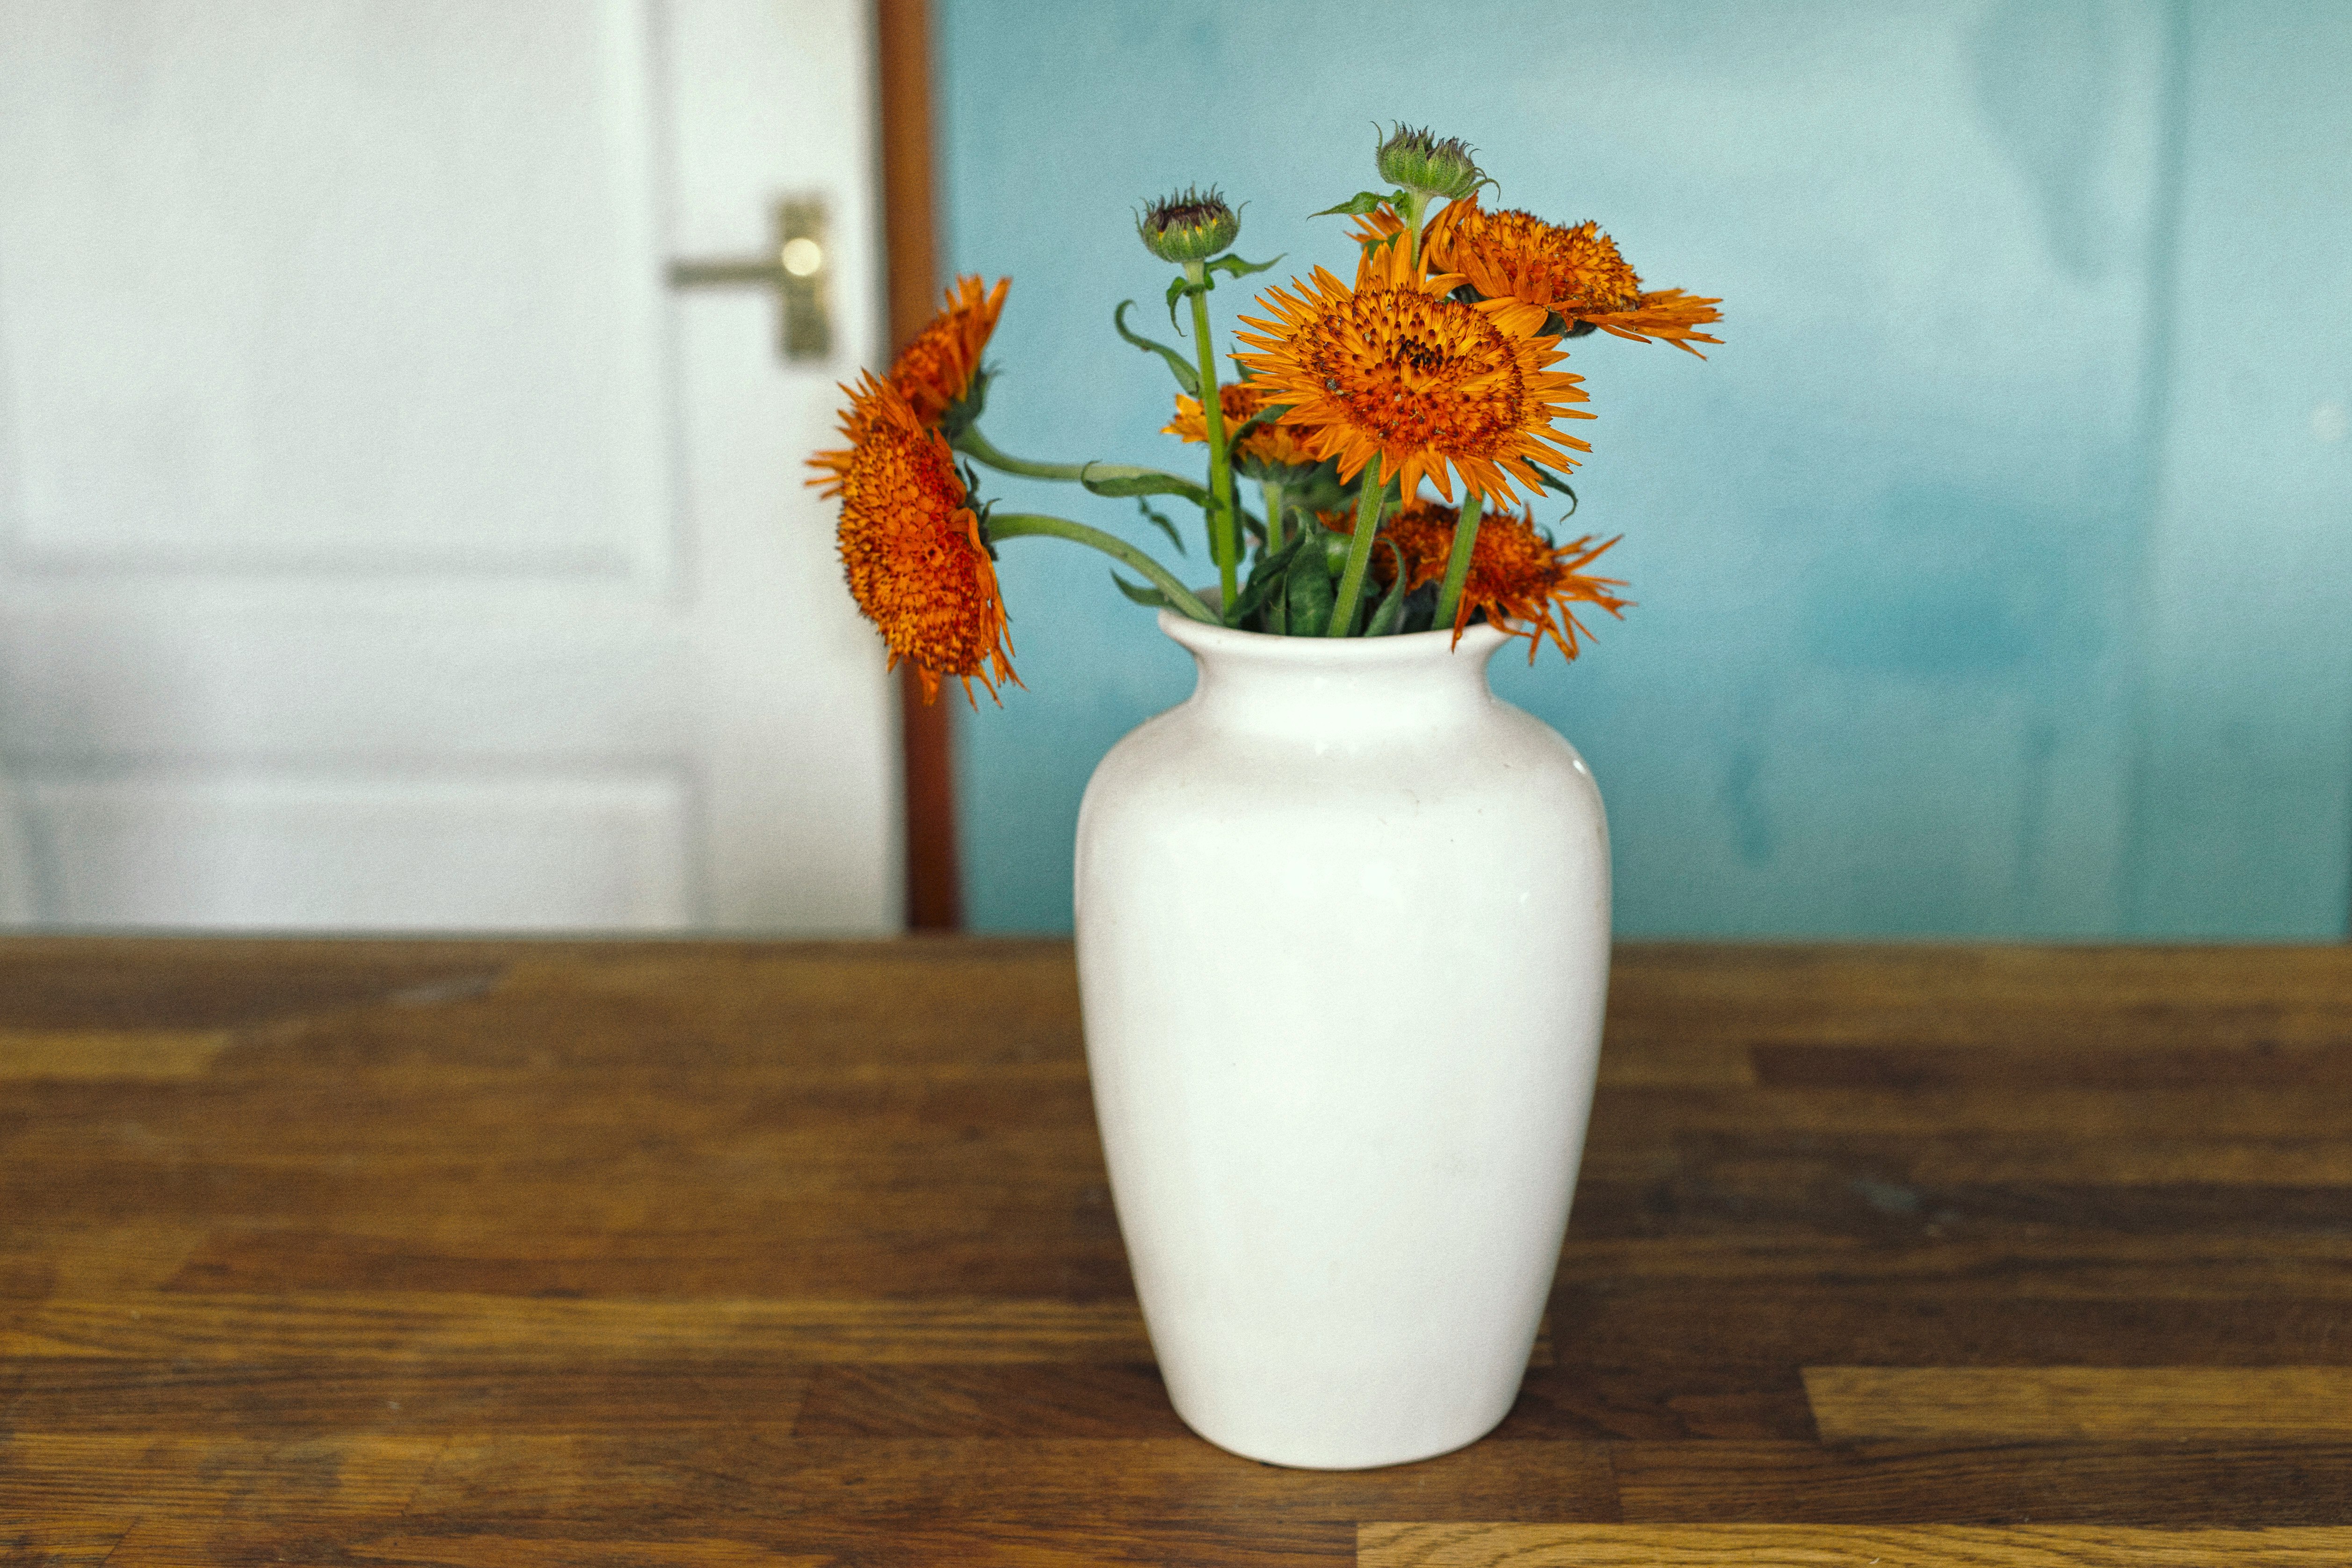 orange and yellow flowers in white ceramic vase